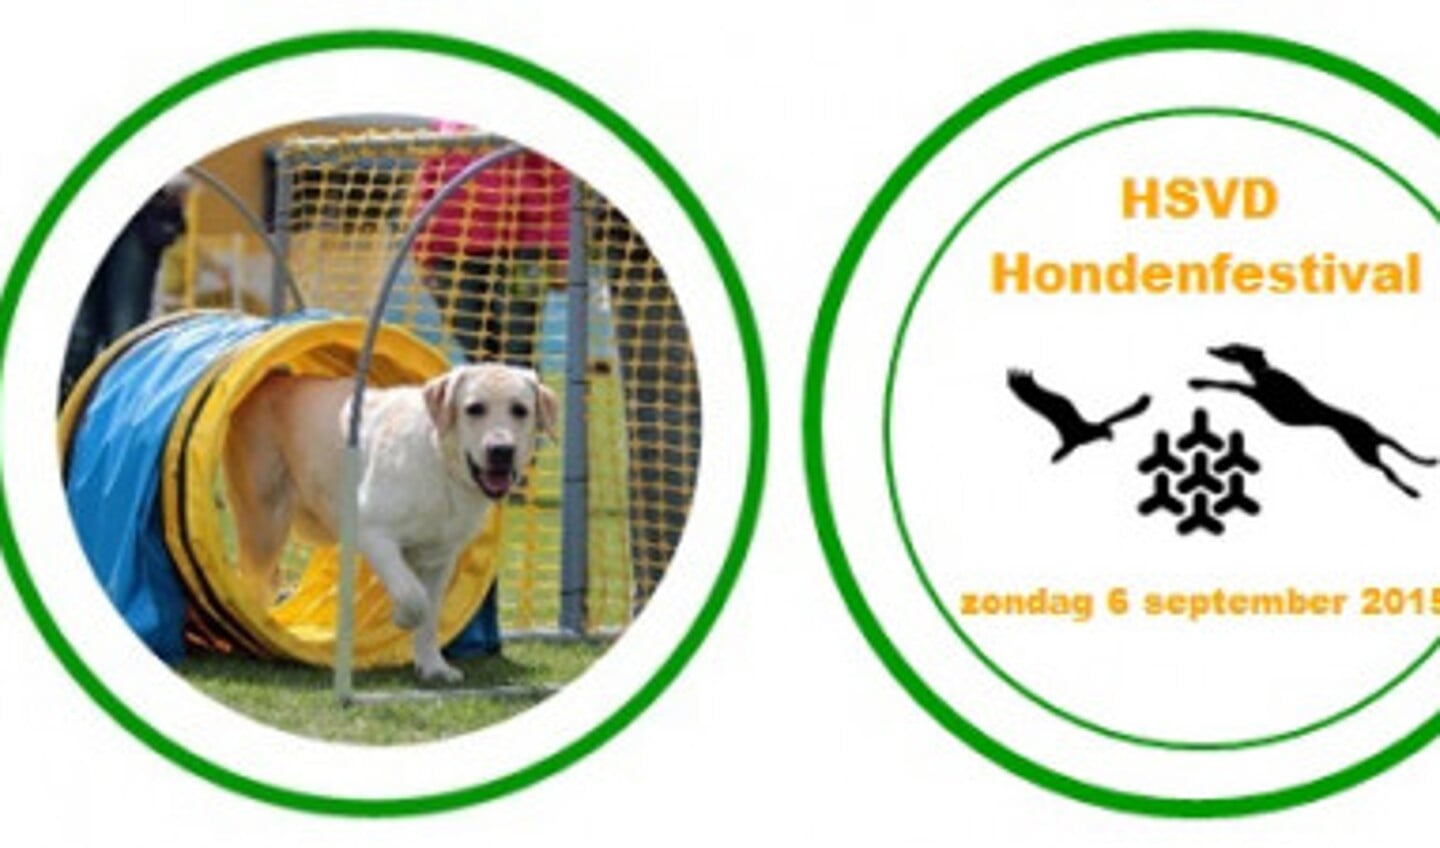 HSVD Hondenfestival: plezier voor mens en dier!